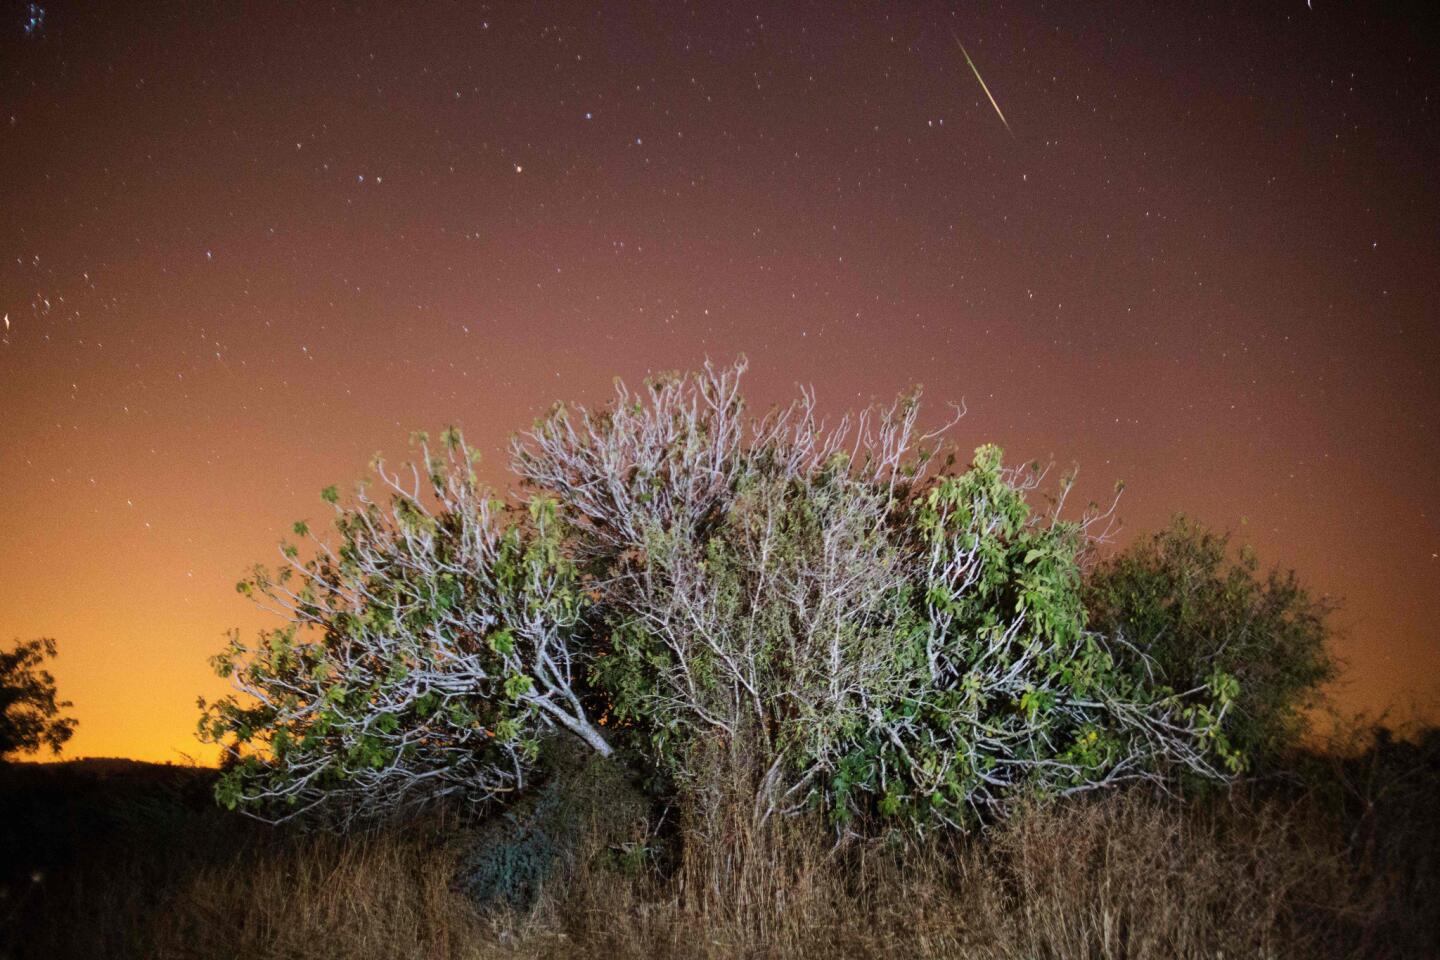 2016 Perseid meteor shower